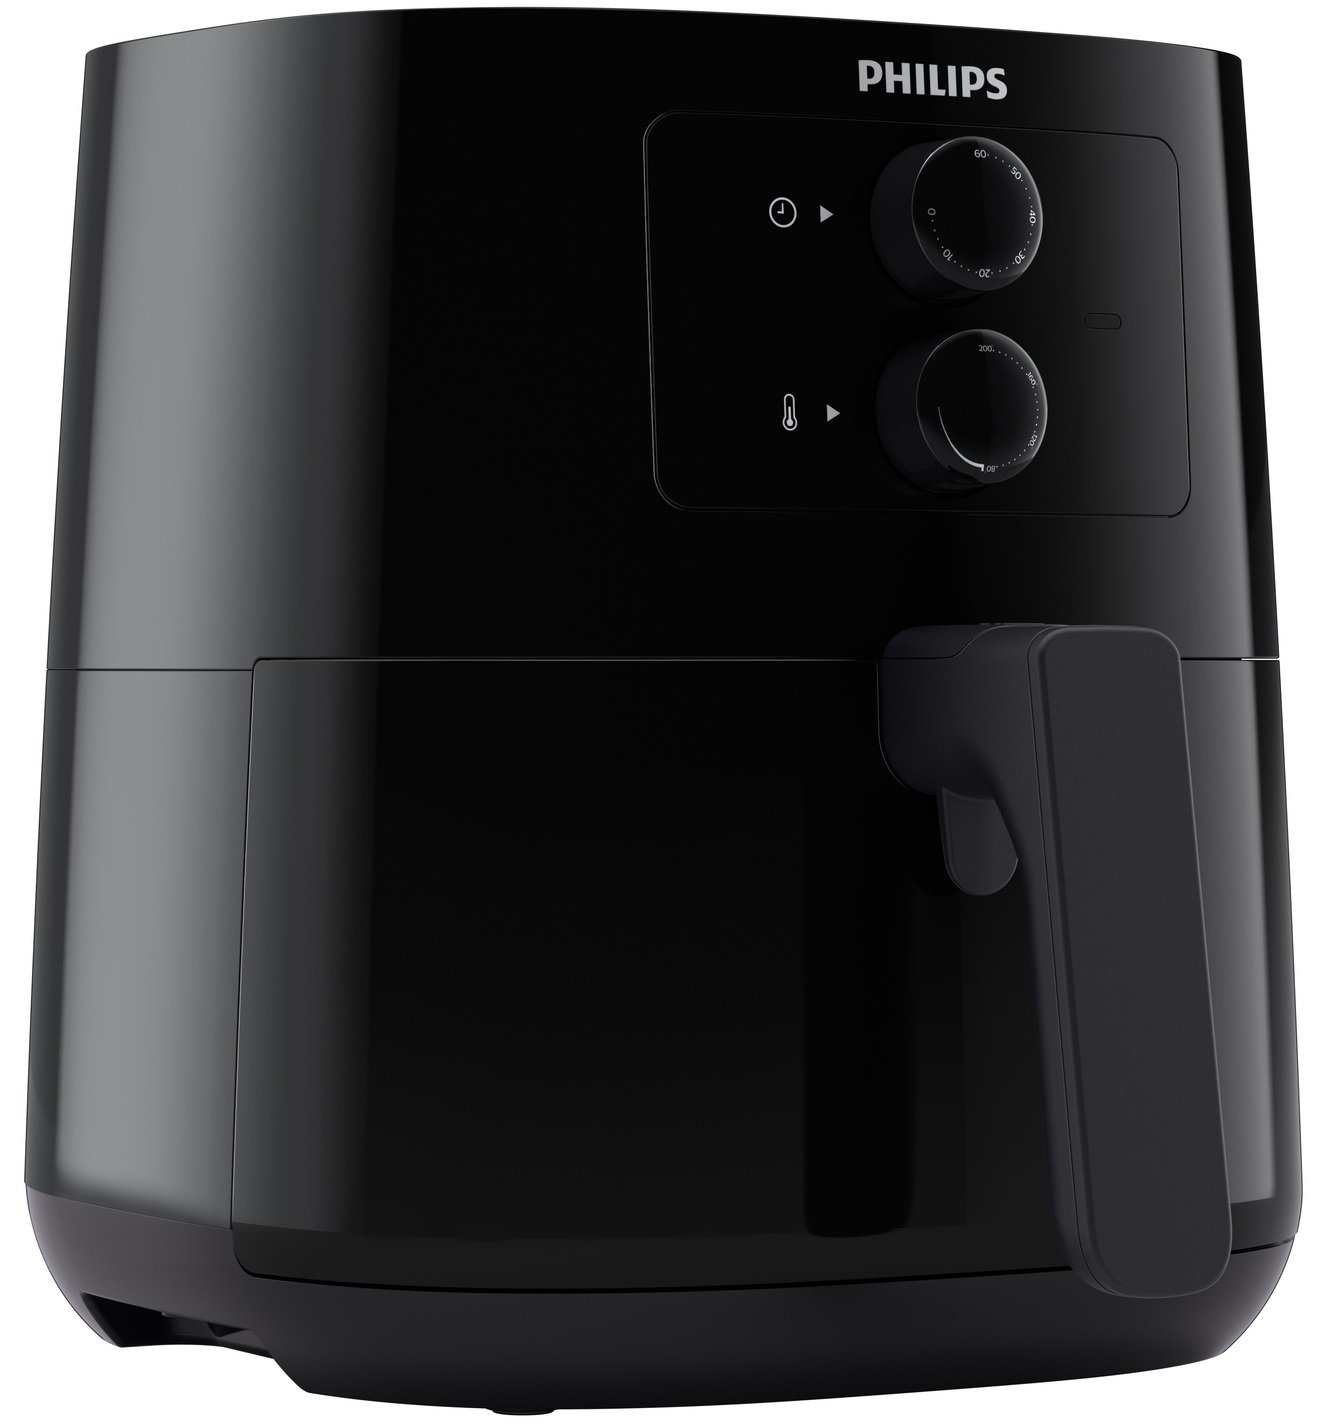 Мультипечь Philips HD9200/90 цена 4699.00 грн - фотография 2